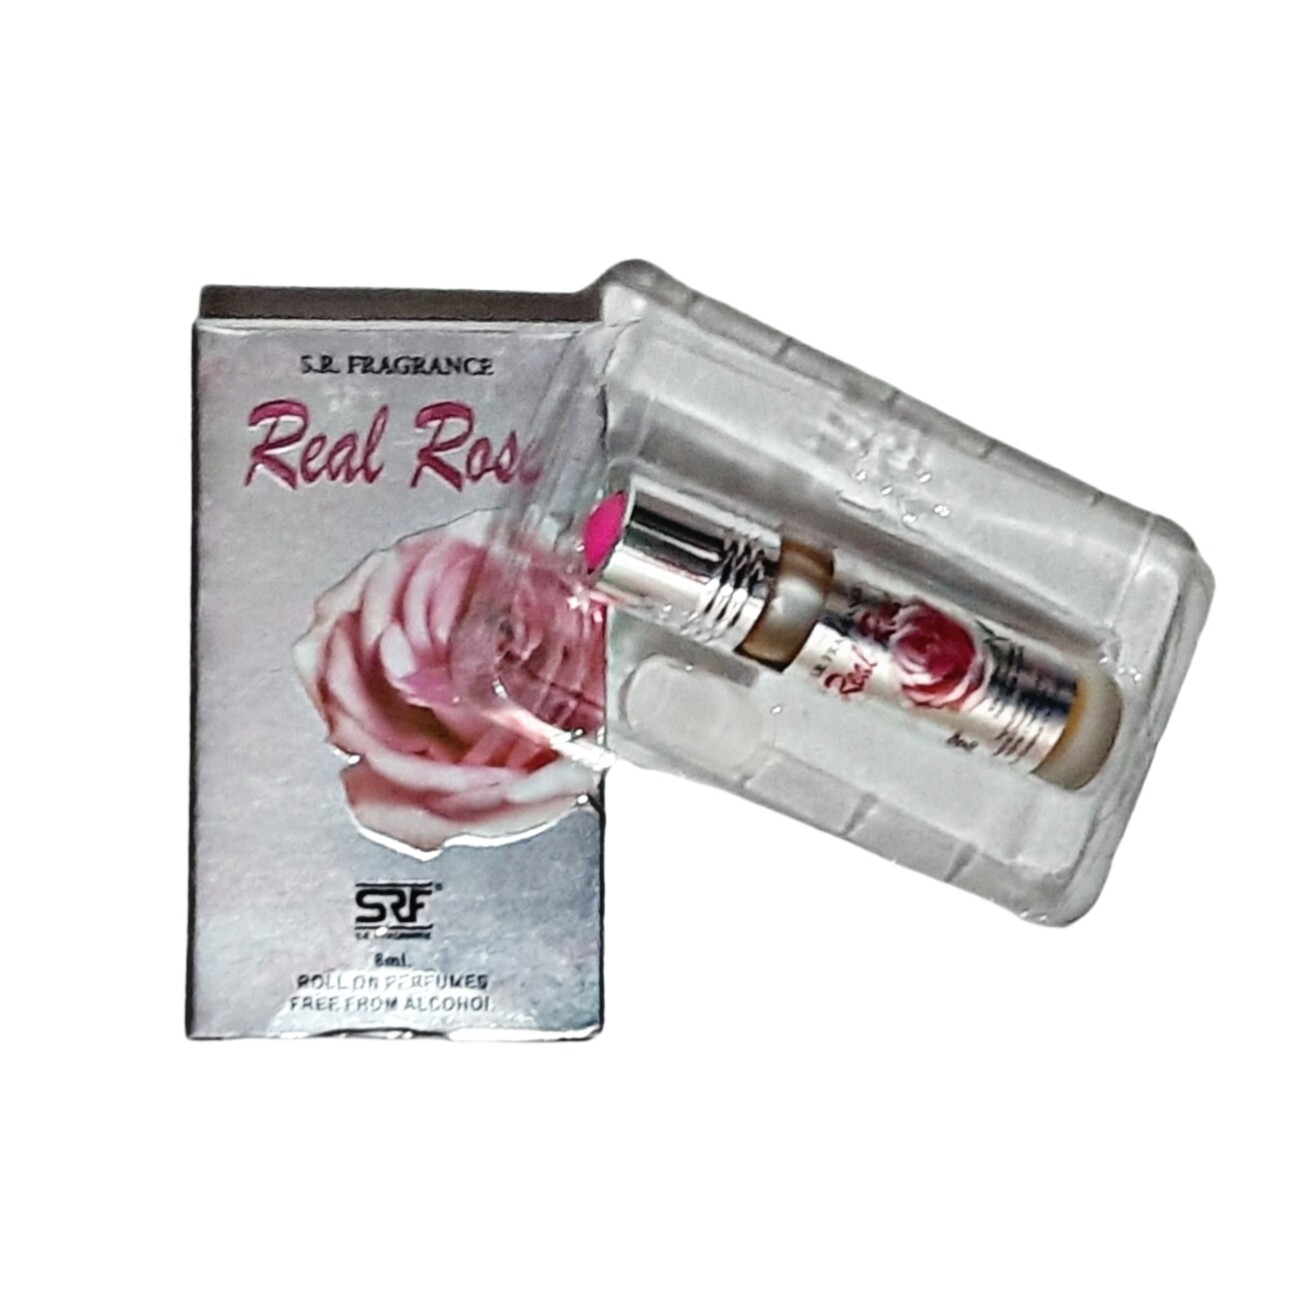 SRF Real Rose ROLL ON PERFUME ATTAR 8 ml